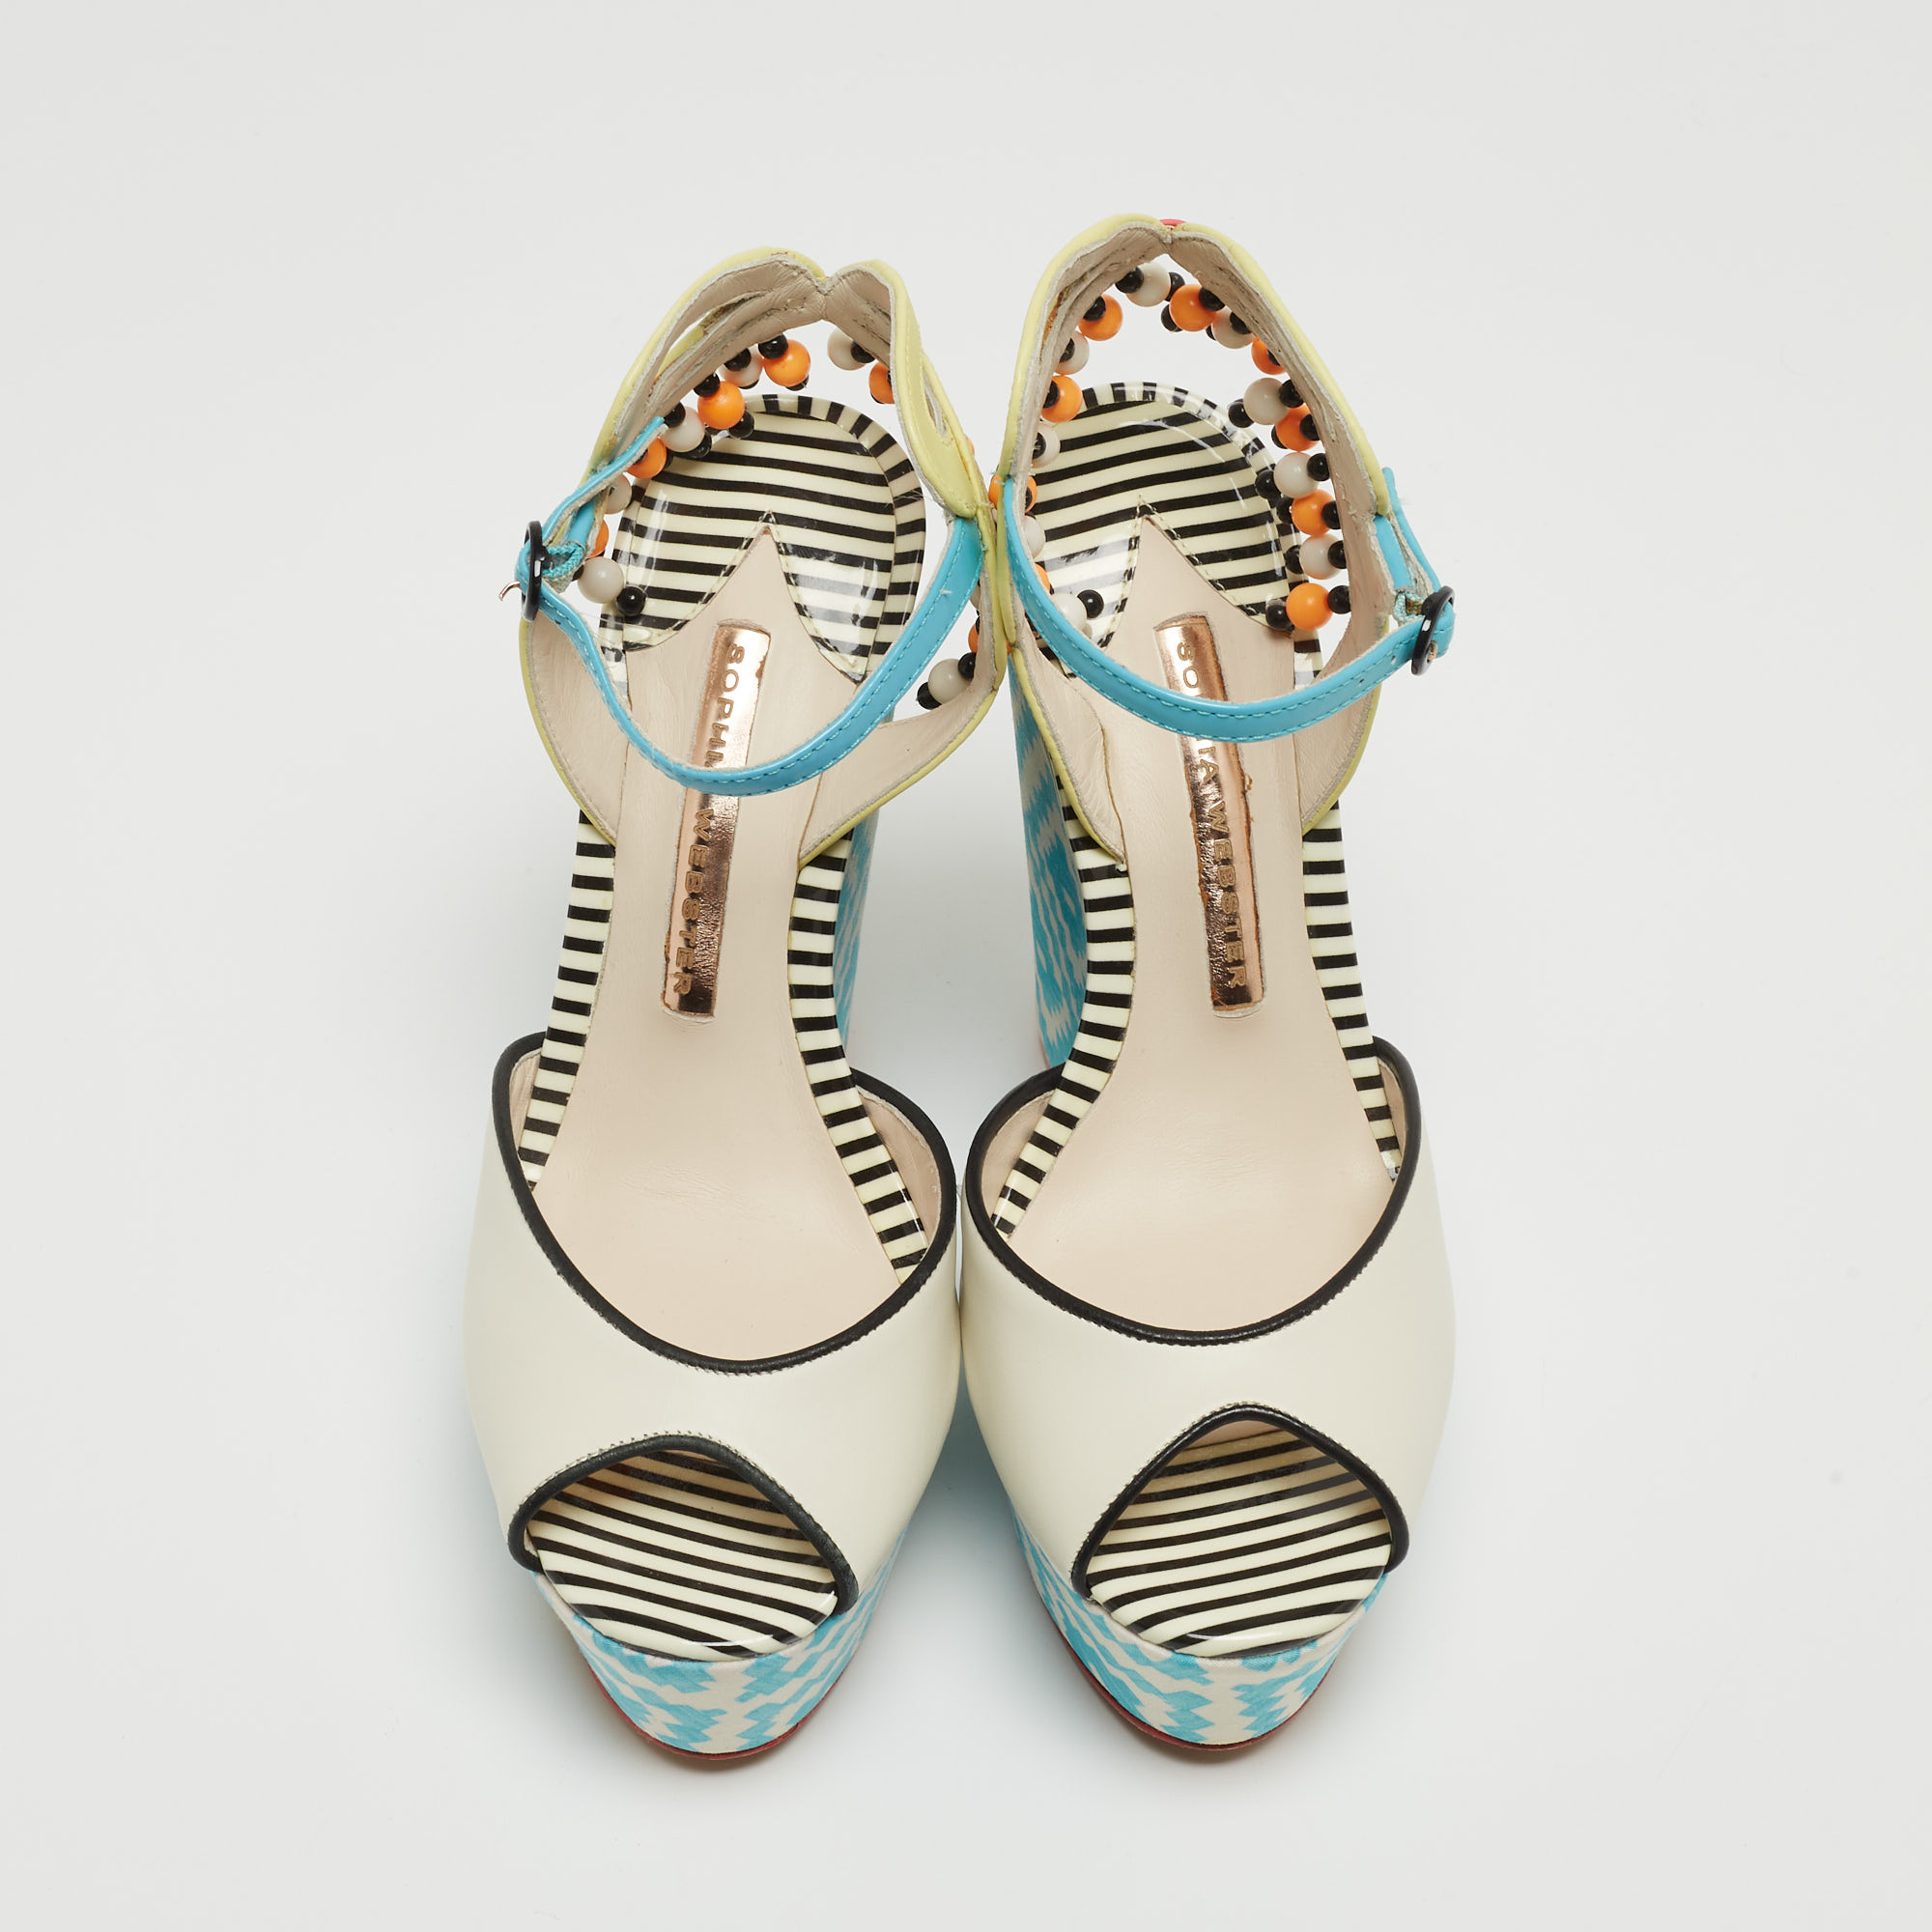 Sophia Webster Multicolor Printed Leather Wedge Sandals Size 36